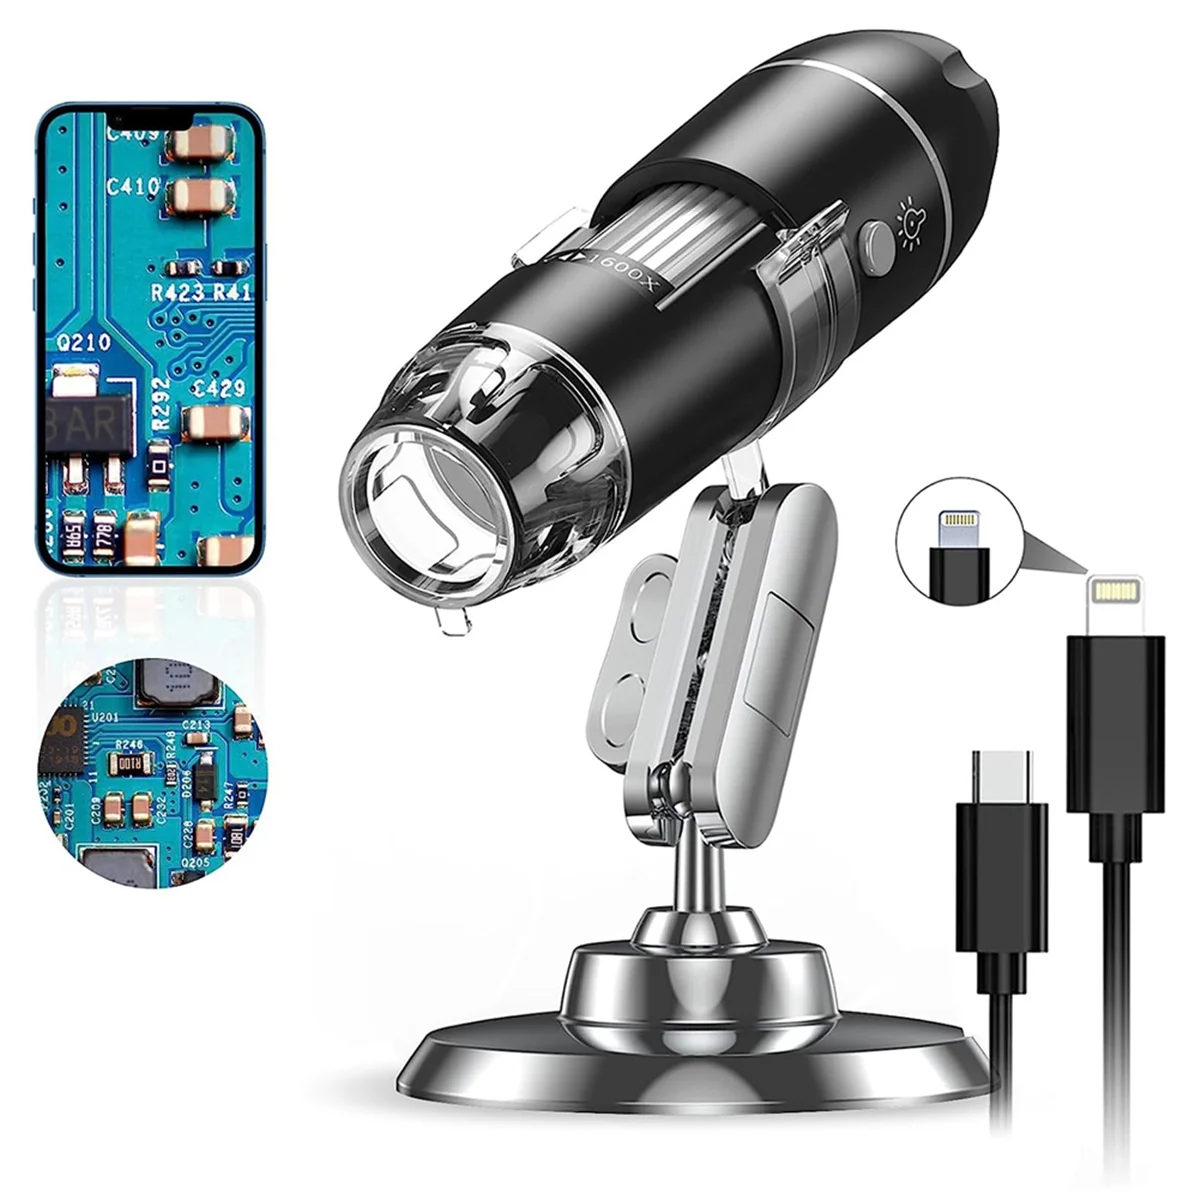 

Digital Microscope Camera, Handheld USB 1440P HD Inspection Camera 50X-1600X Magnification Portable Pocket Microscopes